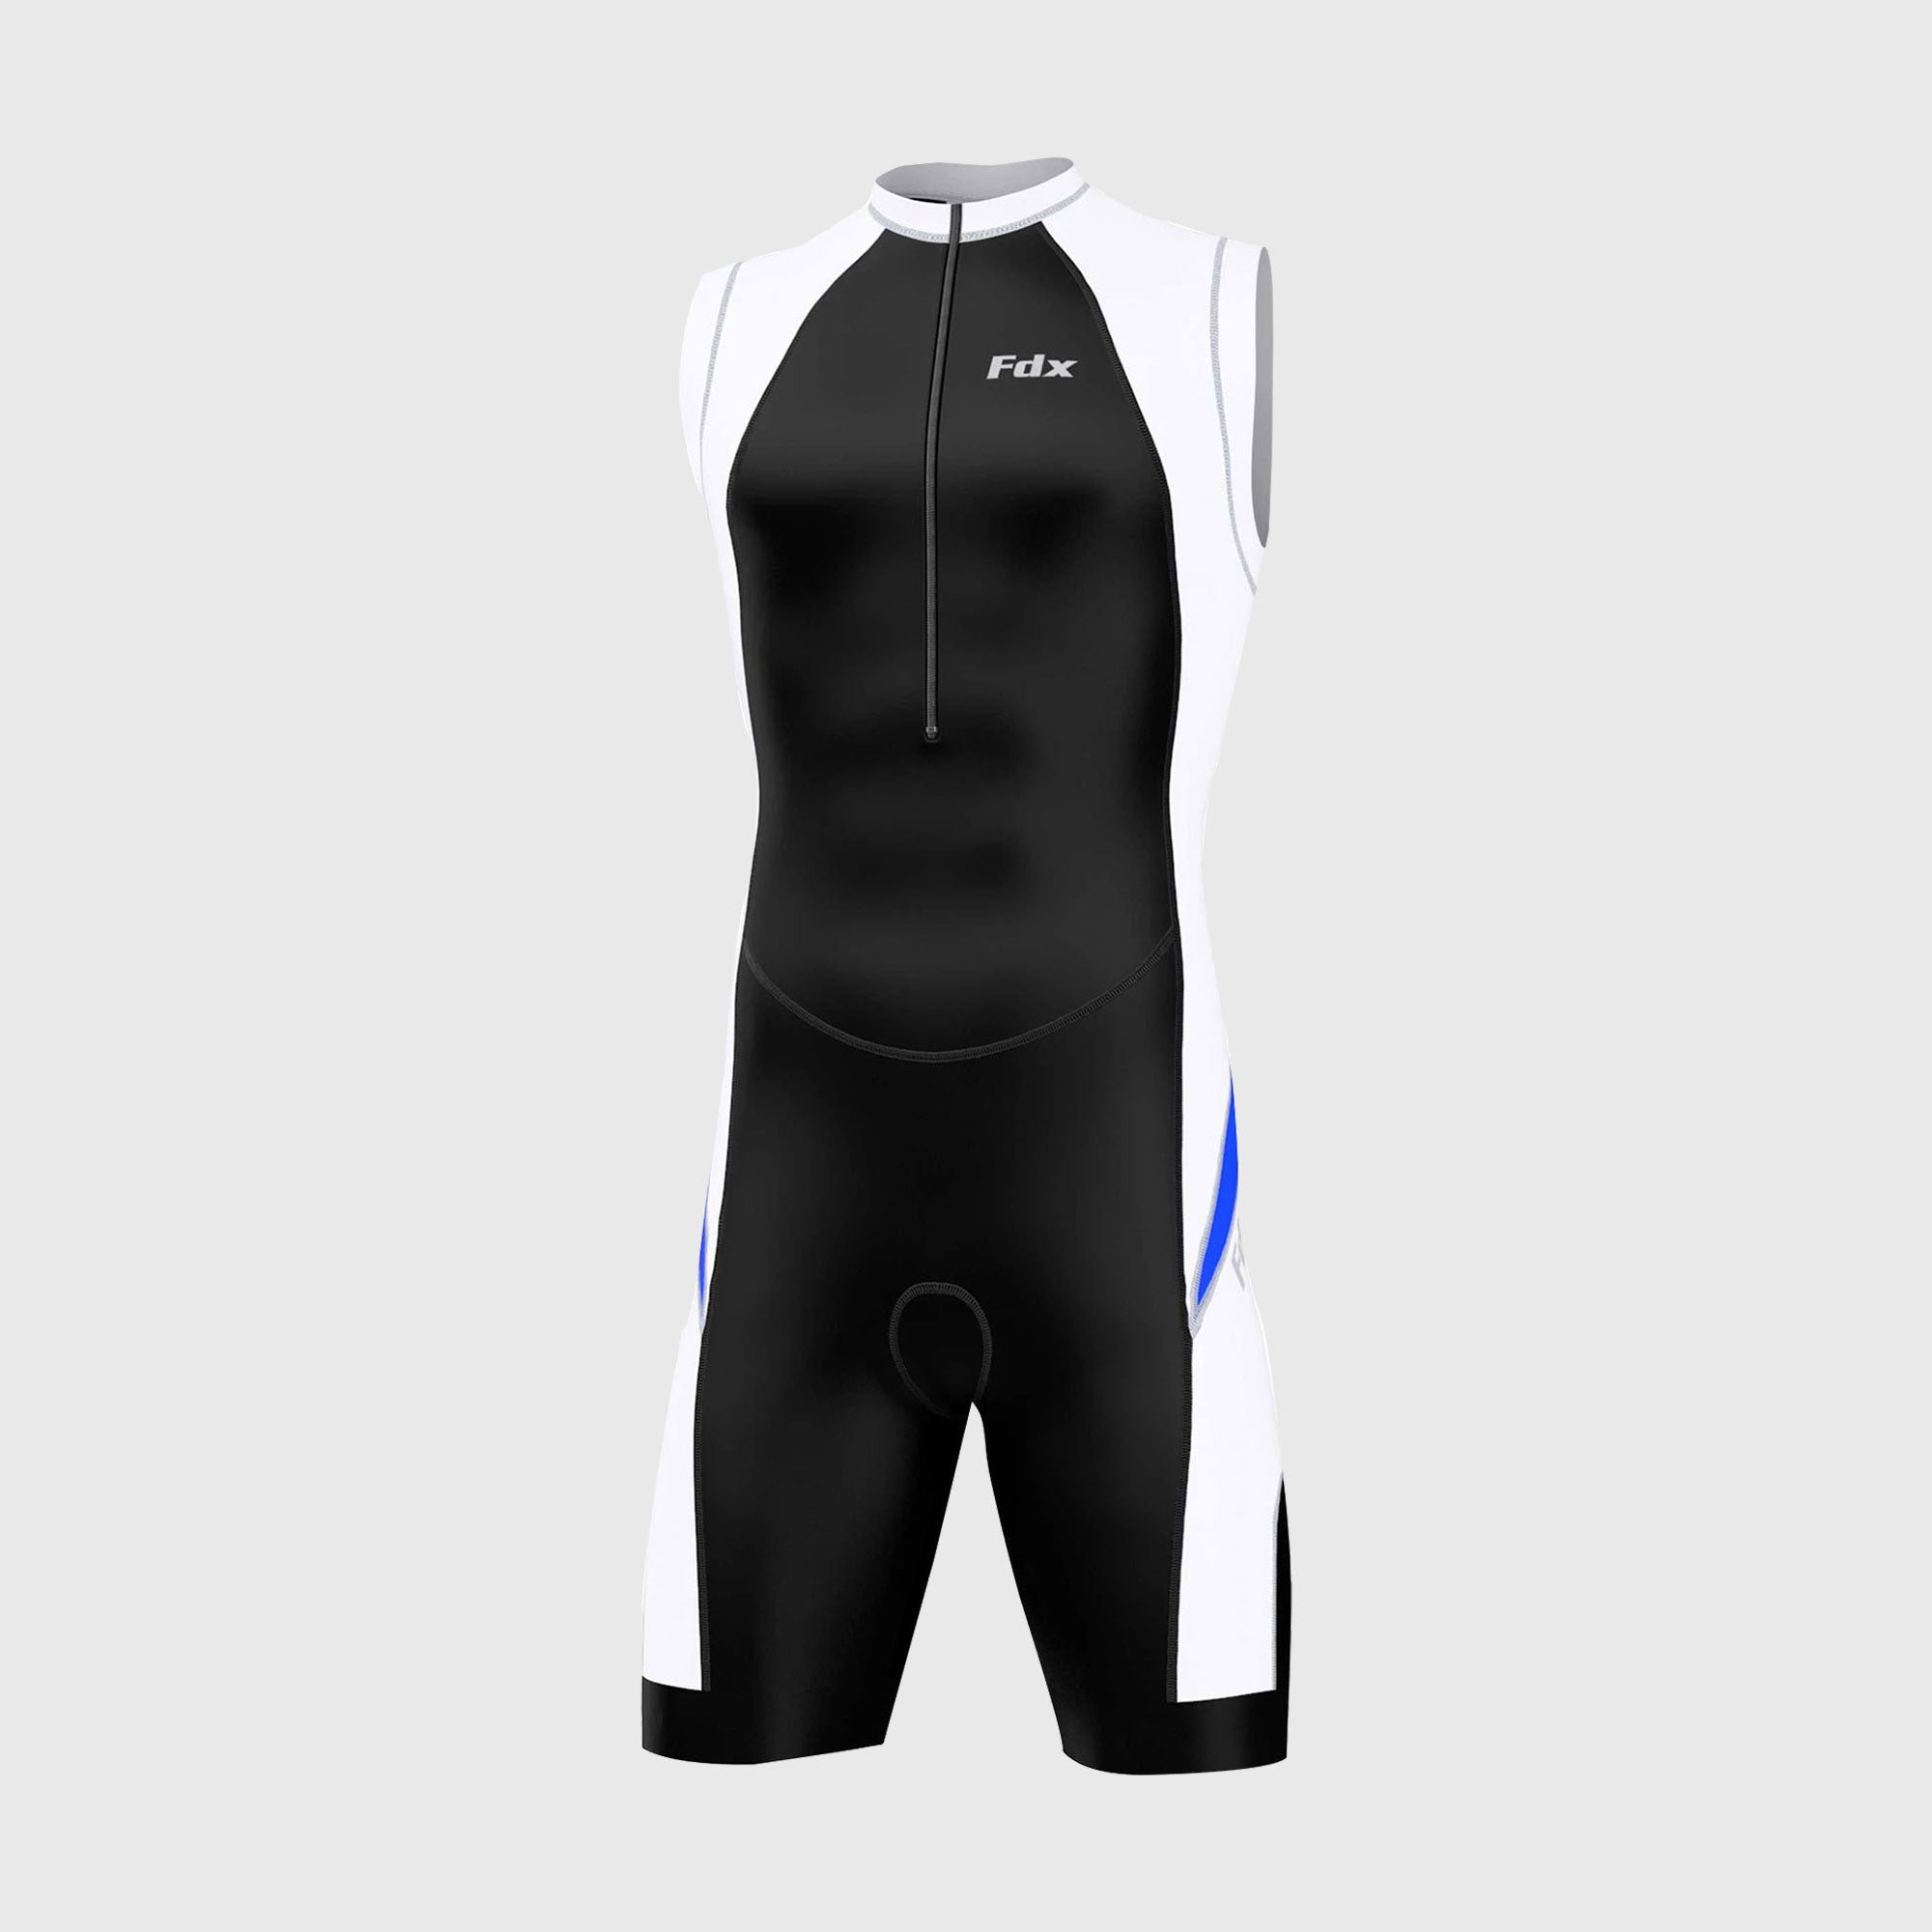 Fdx Mens Black & Blue Sleeveless Gel Padded Triathlon / Skin Suit for Summer Cycling Wear, Runnung & Swimming Half Zip - Zion